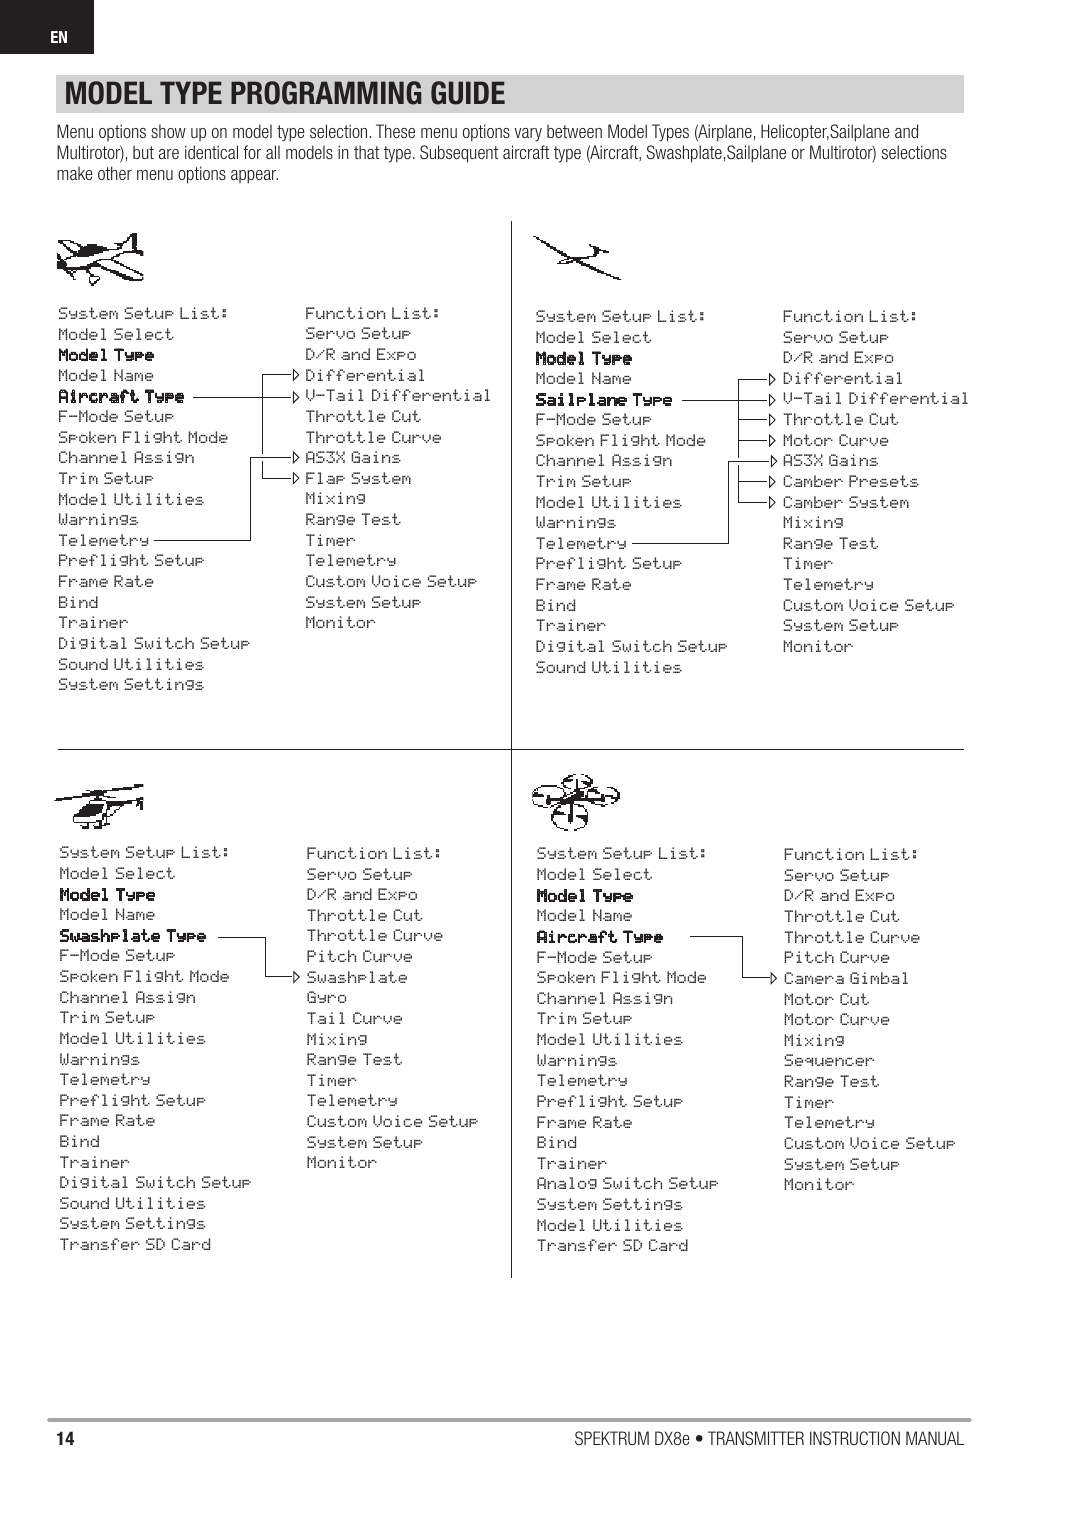 14 SPEKTRUM DX8e • TRANSMITTER INSTRUCTION MANUALENMODEL TYPE PROGRAMMING GUIDEMenu options show up on model type selection. These menu options vary between Model Types (Airplane, Helicopter,Sailplane and Multirotor), but are identical for all models in that type. Subsequent aircraft type (Aircraft, Swashplate,Sailplane or Multirotor) selections make other menu options appear.System Setup List:Model SelectModel Type  Model NameAircraft TypeF-Mode SetupSpoken Flight ModeChannel AssignTrim SetupModel UtilitiesWarningsTelemetry Preflight SetupFrame RateBindTrainerDigital Switch SetupSound UtilitiesSystem SettingsFunction List: Servo SetupD/R and ExpoDifferential V-Tail Differential Throttle CutThrottle CurveAS3X GainsFlap System MixingRange TestTimerTelemetry Custom Voice SetupSystem SetupMonitorSystem Setup List:Model SelectModel Type  Model NameSwashplate Type F-Mode SetupSpoken Flight ModeChannel AssignTrim SetupModel UtilitiesWarningsTelemetry Preflight SetupFrame RateBindTrainerDigital Switch SetupSound UtilitiesSystem SettingsTransfer SD CardFunction List: Servo SetupD/R and ExpoThrottle Cut Throttle Curve Pitch Curve Swashplate Gyro  Tail Curve MixingRange TestTimerTelemetryCustom Voice Setup System SetupMonitorSystem Setup List:Model SelectModel Type  Model NameAircraft Type F-Mode SetupSpoken Flight ModeChannel AssignTrim SetupModel UtilitiesWarningsTelemetry Preflight SetupFrame RateBindTrainerAnalog Switch SetupSystem SettingsModel UtilitiesTransfer SD CardFunction List: Servo SetupD/R and ExpoThrottle Cut Throttle Curve Pitch Curve Camera Gimbal Motor CutMotor Curve MixingSequencerRange TestTimerTelemetryCustom Voice SetupSystem SetupMonitor  System Setup List:Model SelectModel Type  Model NameSailplane TypeF-Mode SetupSpoken Flight ModeChannel AssignTrim SetupModel UtilitiesWarningsTelemetry Preflight SetupFrame RateBindTrainerDigital Switch SetupSound UtilitiesFunction List: Servo SetupD/R and ExpoDifferential V-Tail Differential Throttle CutMotor CurveAS3X Gains Camber Presets Camber System MixingRange TestTimerTelemetryCustom Voice SetupSystem Setup Monitor